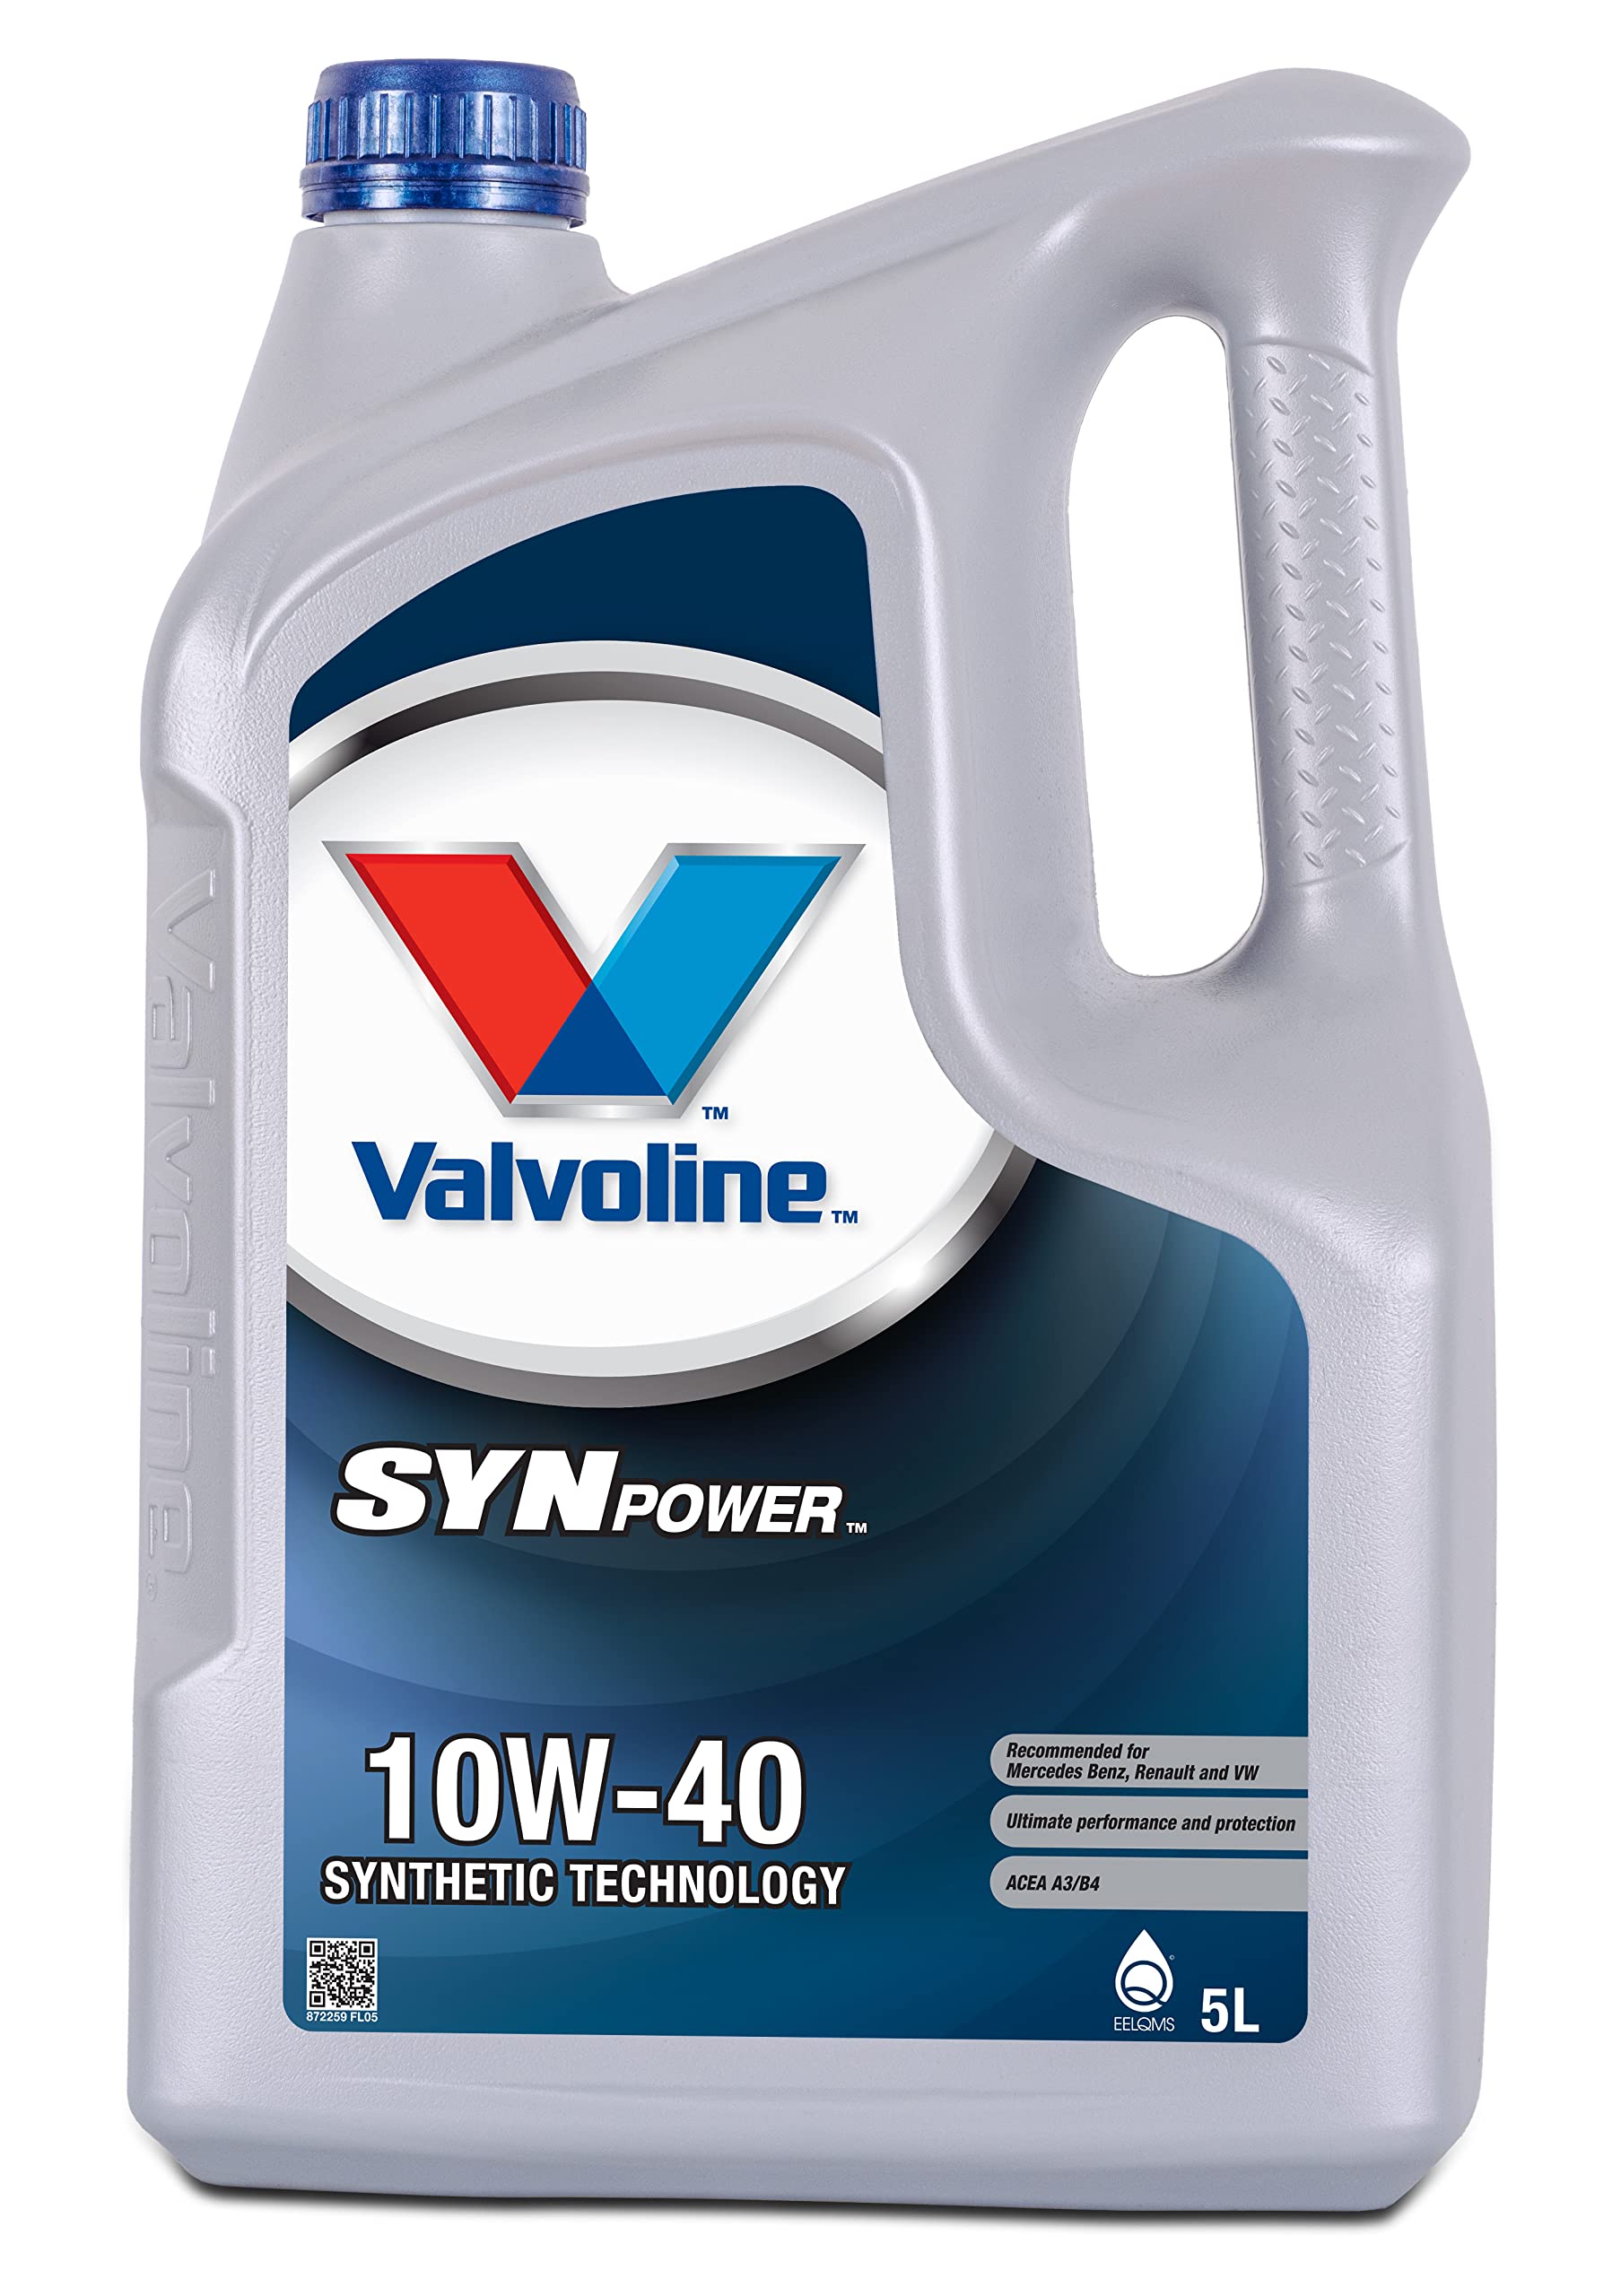 Valvoline SynPower 10W-40, 5L